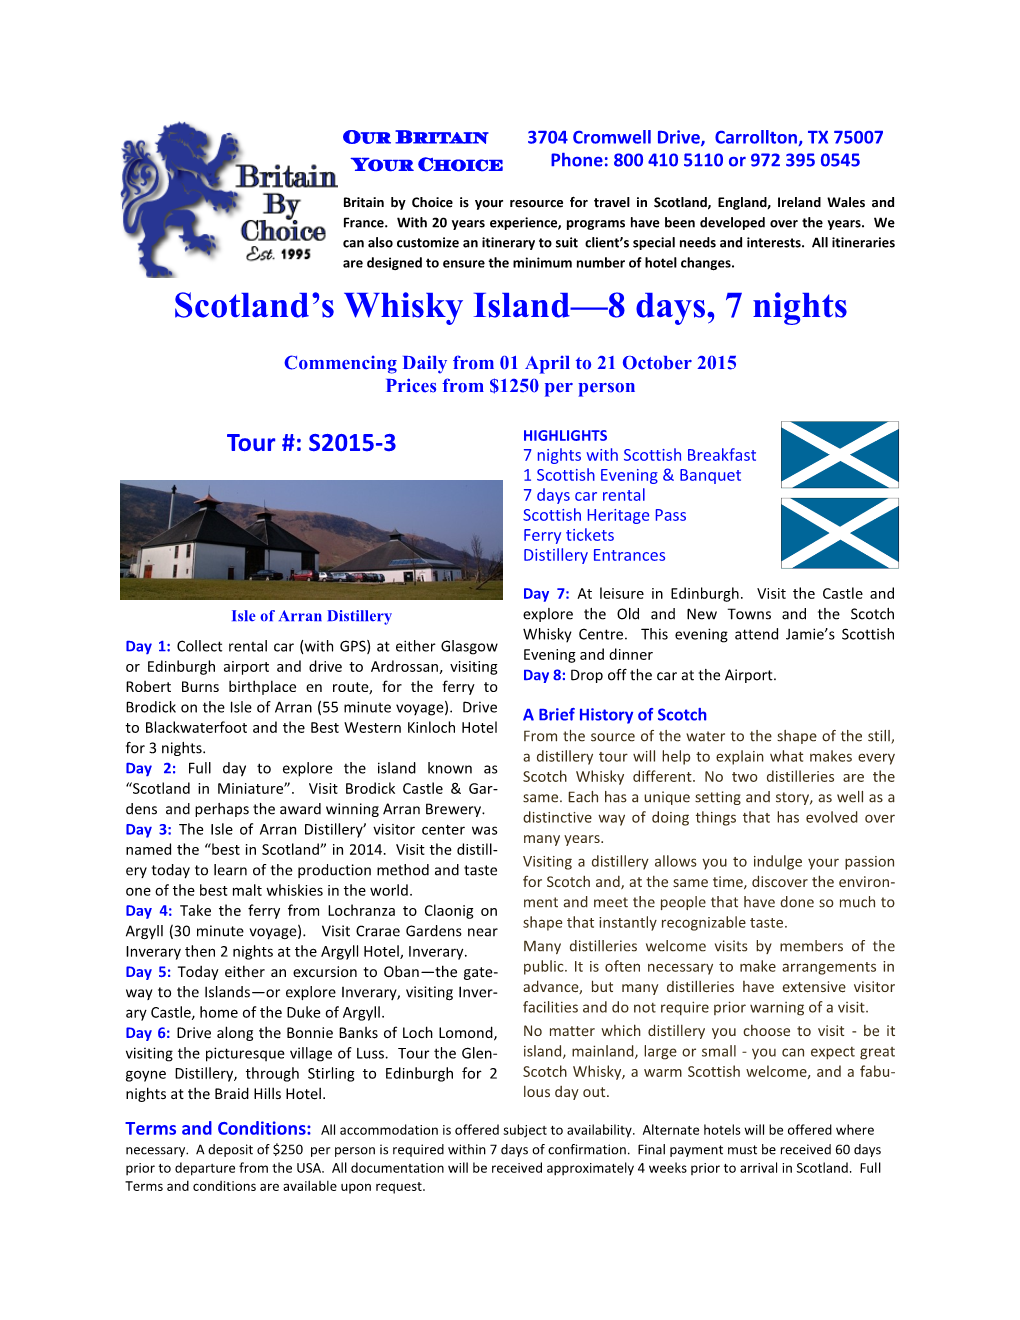 Scotland's Whisky Island—8 Days, 7 Nights